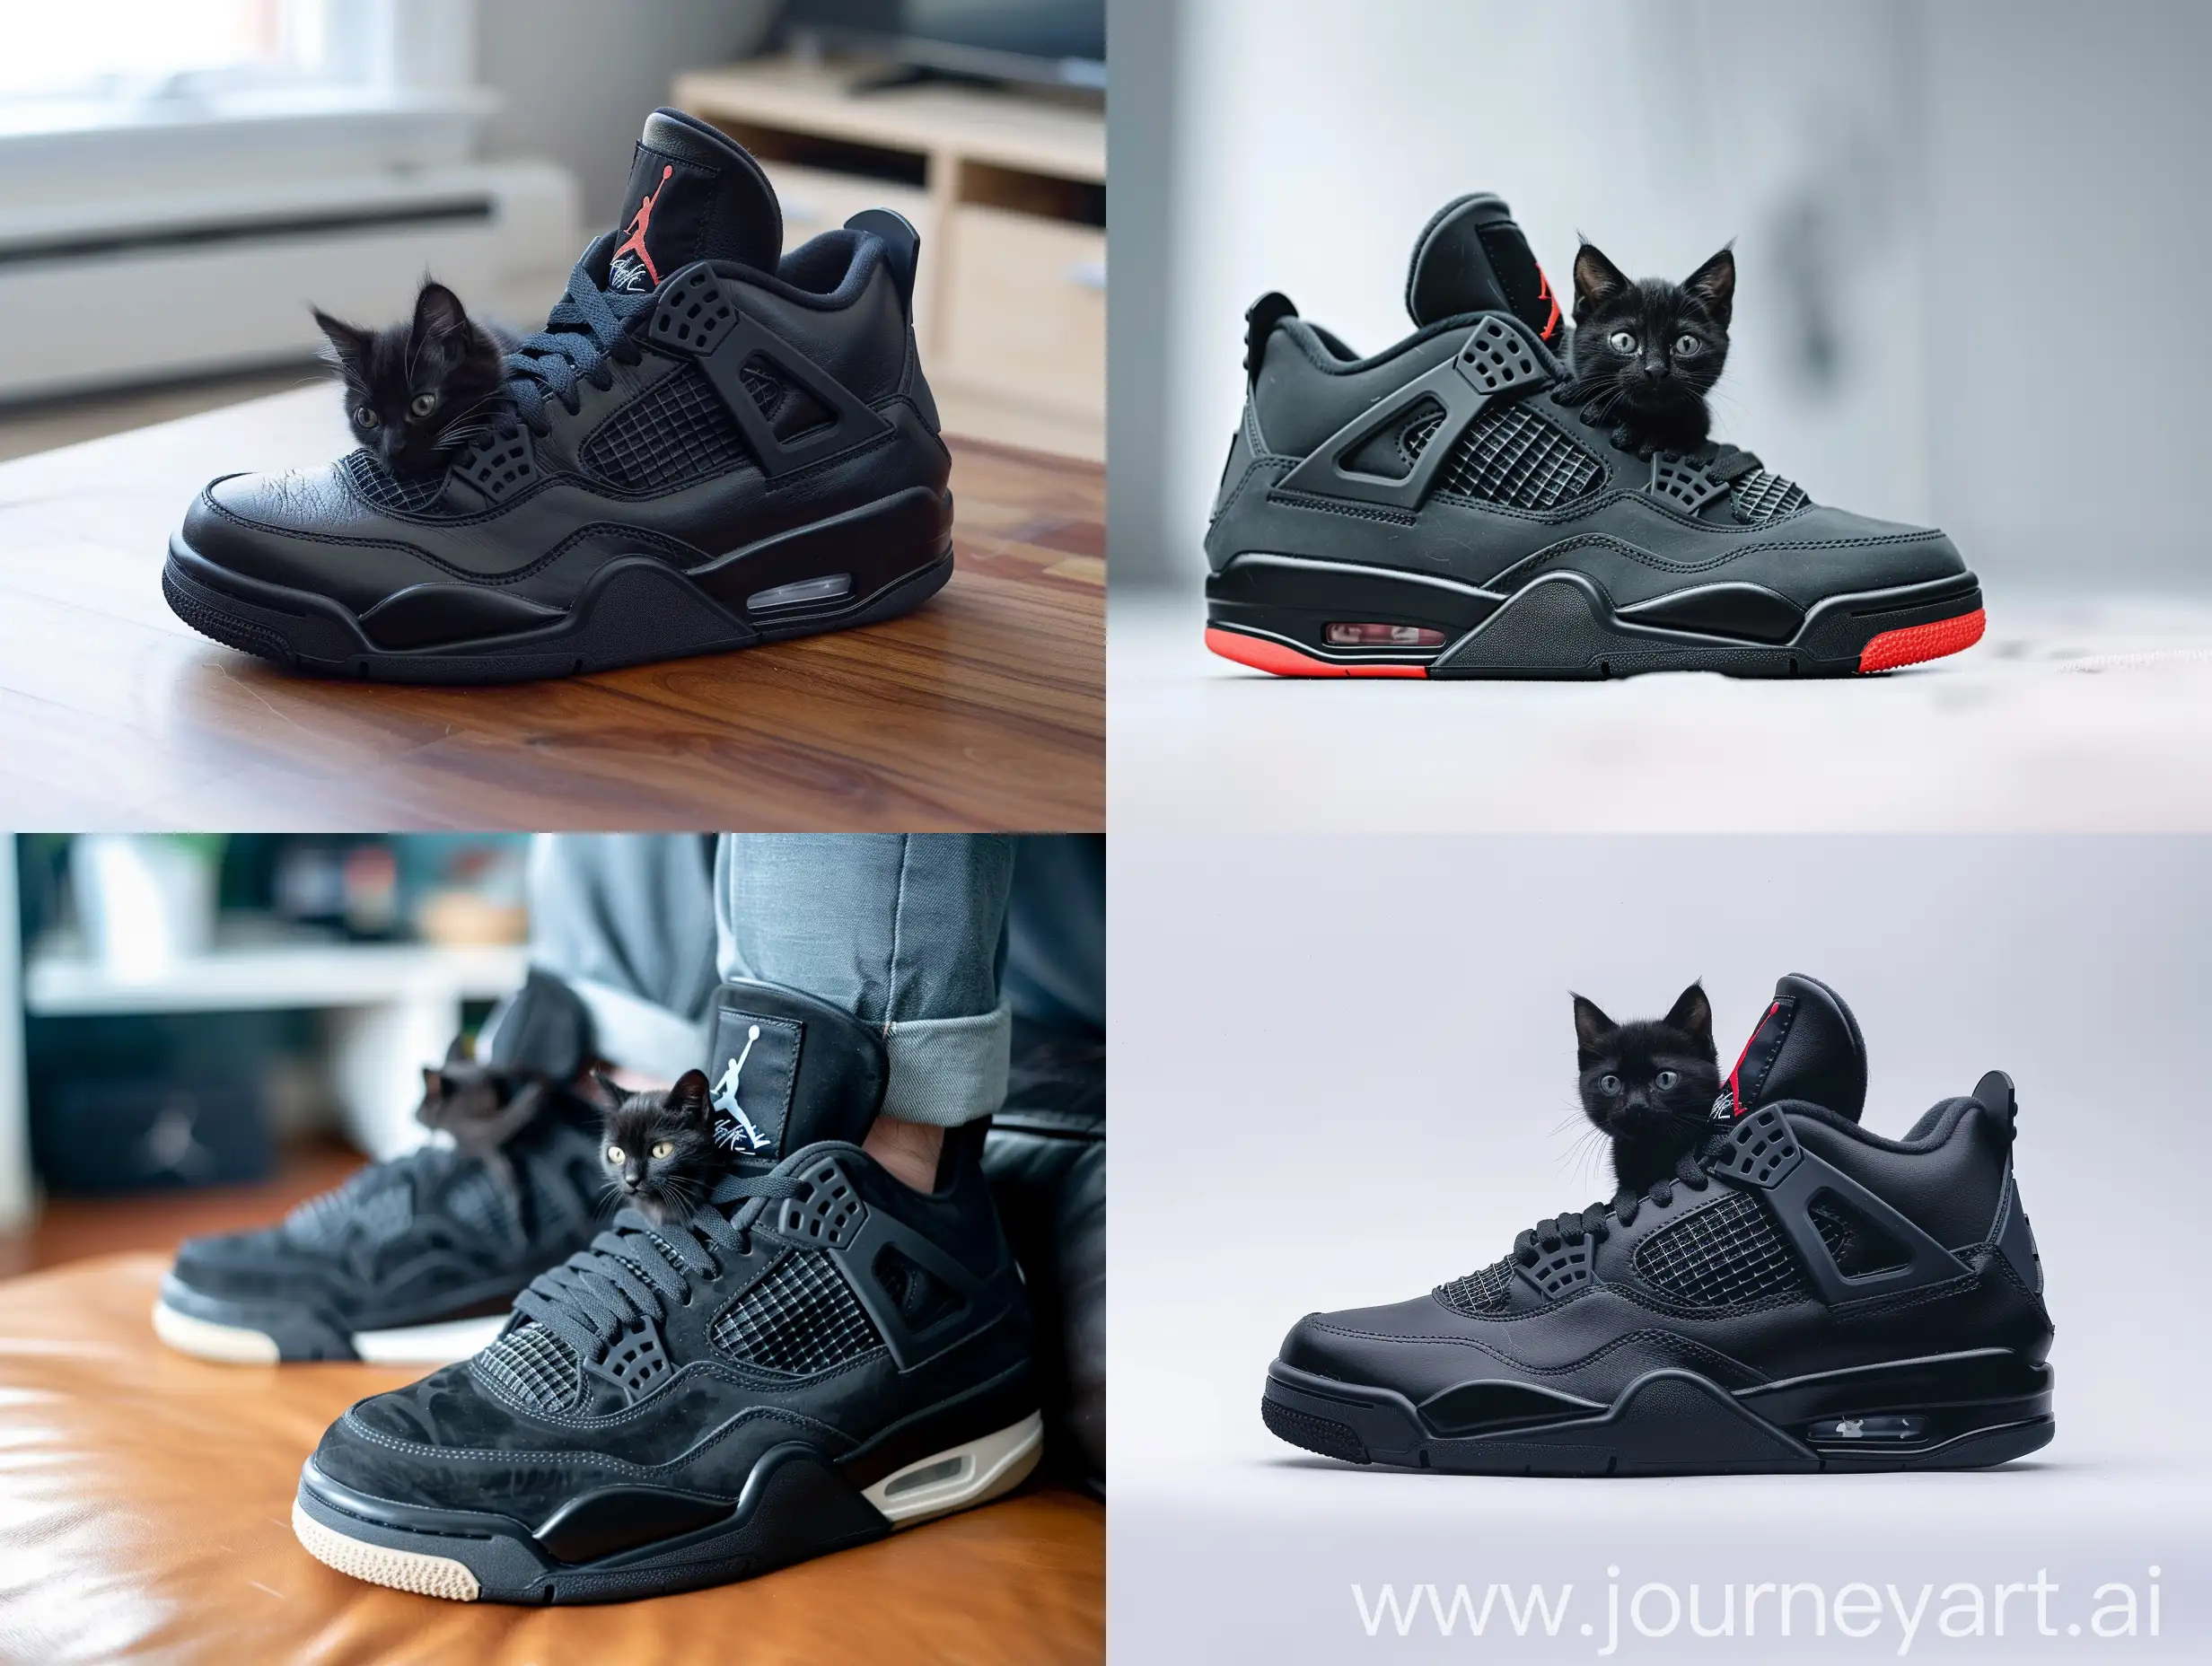 Adorable-Black-Cat-Inside-Nike-Jordan-4-Black-Cat-Shoes